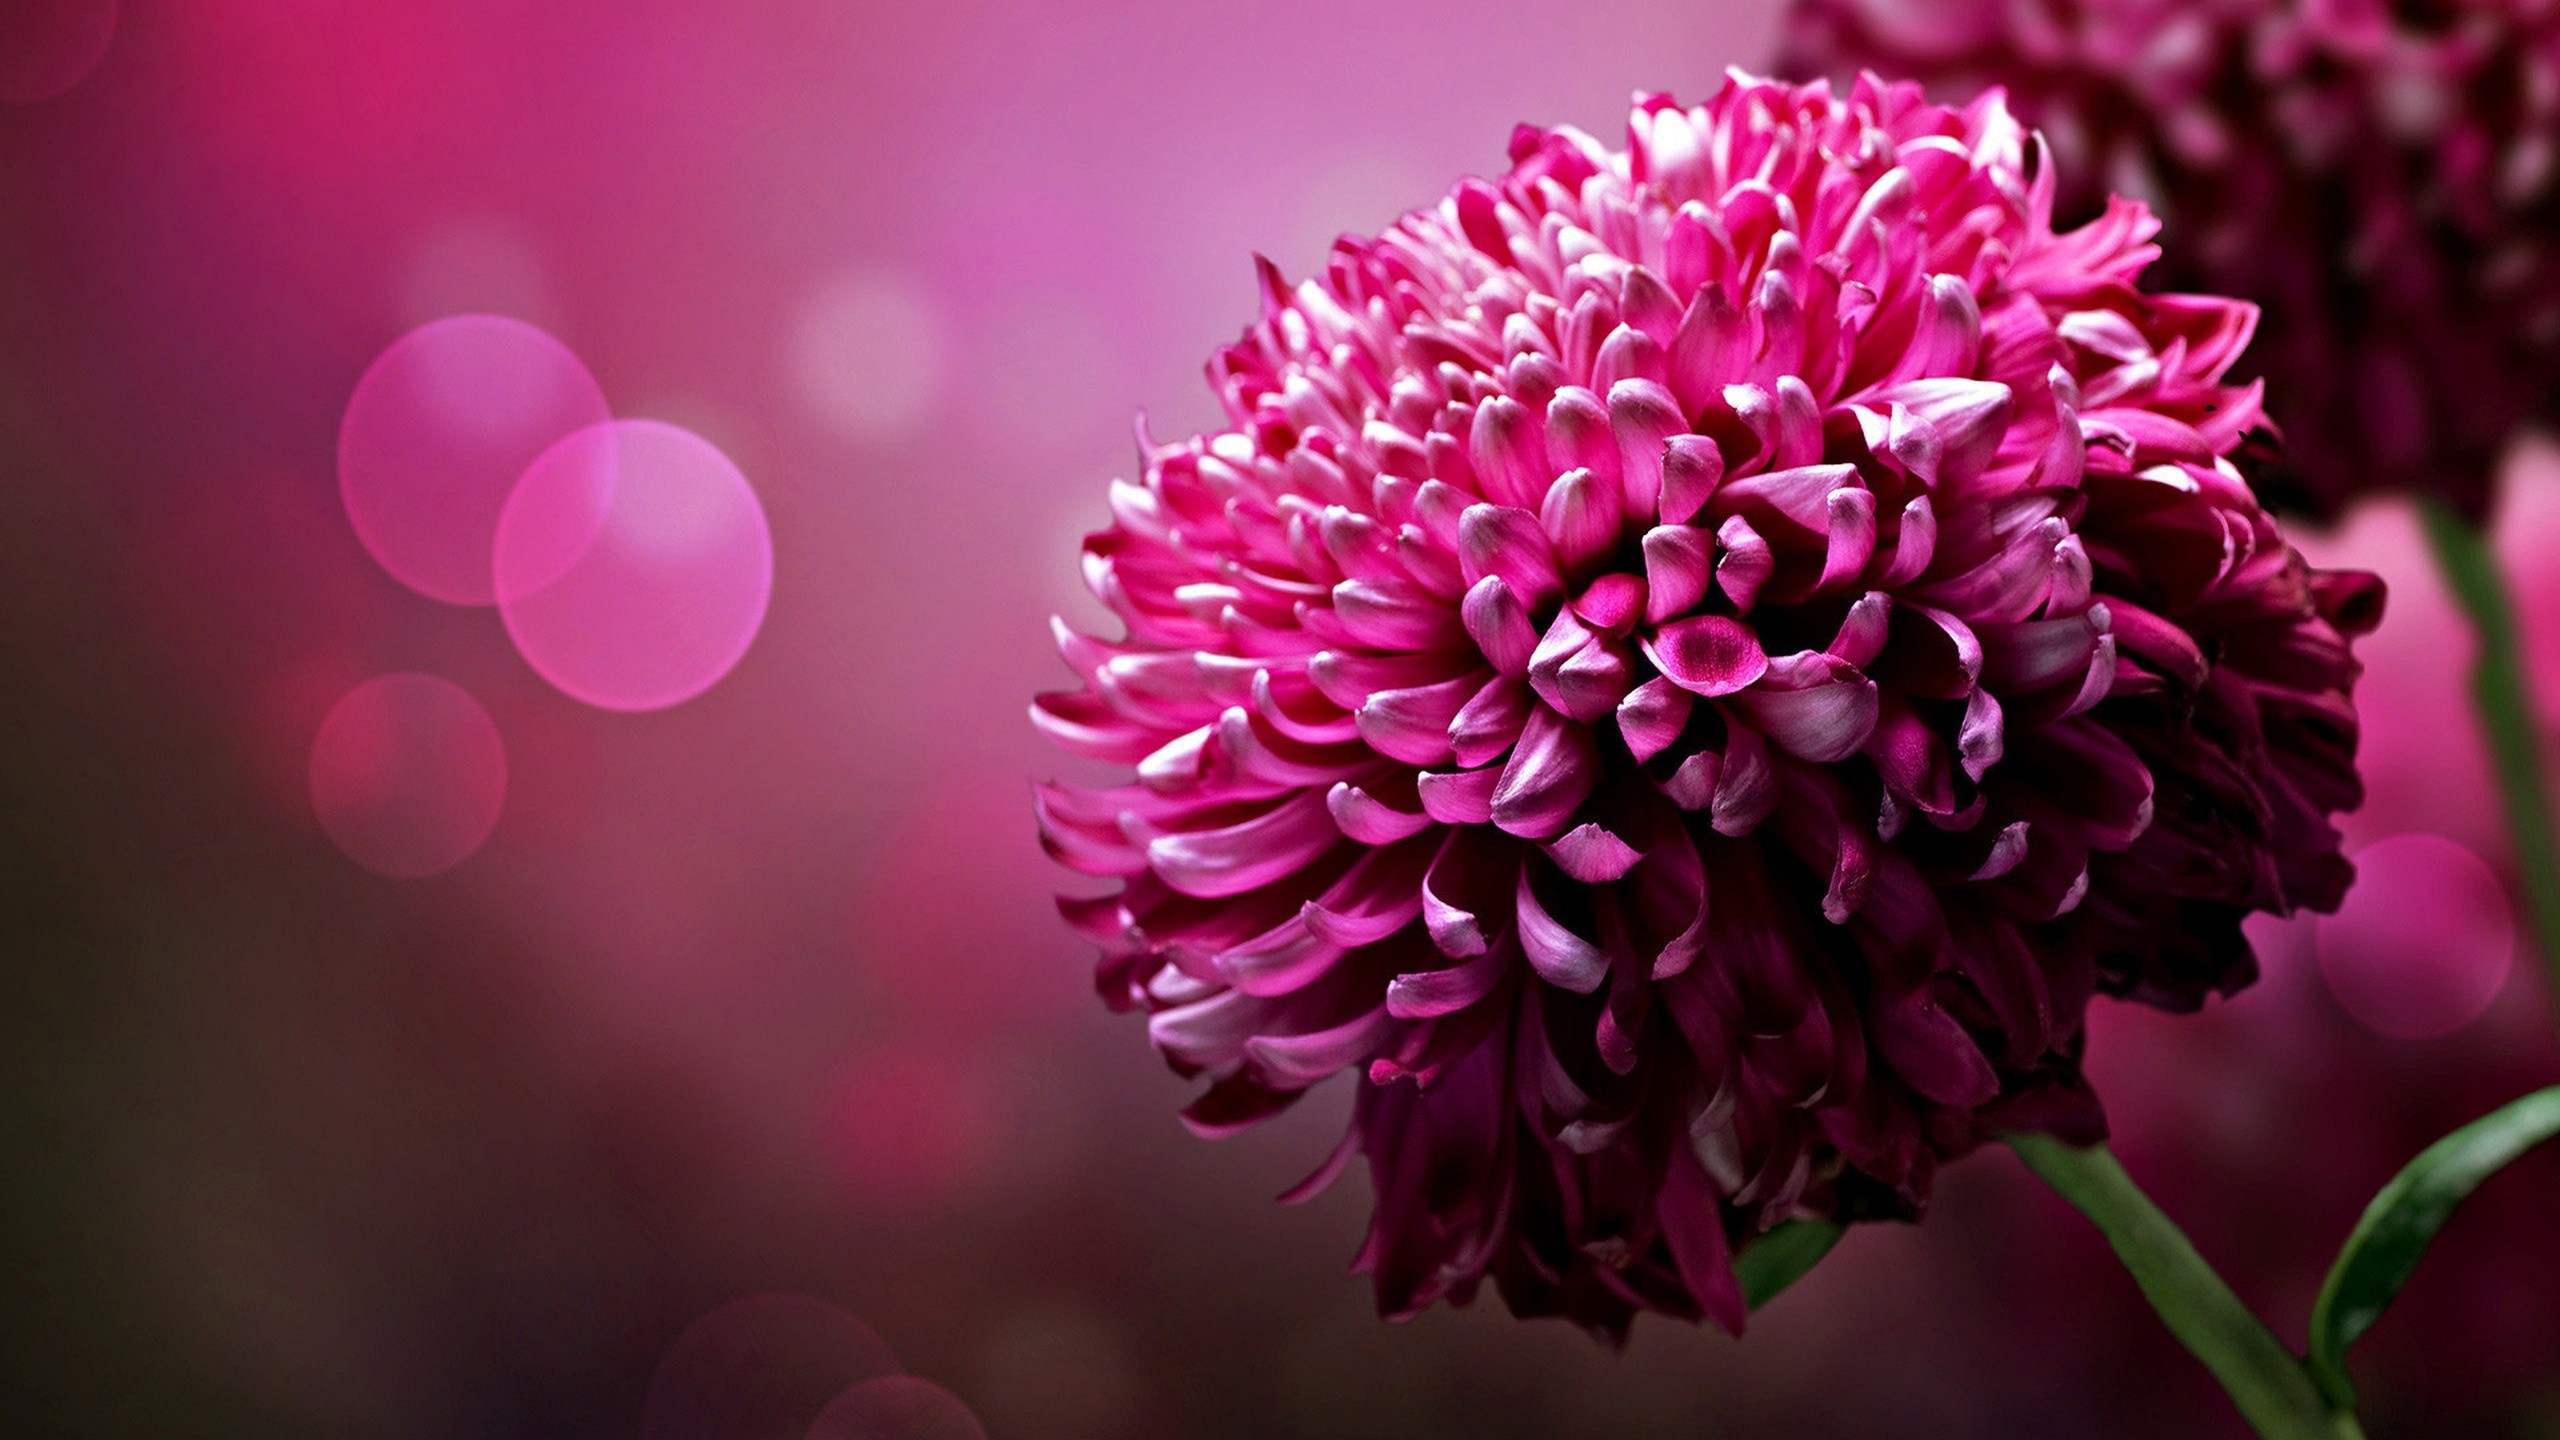 HD Wallpaper Pink Flowers Image